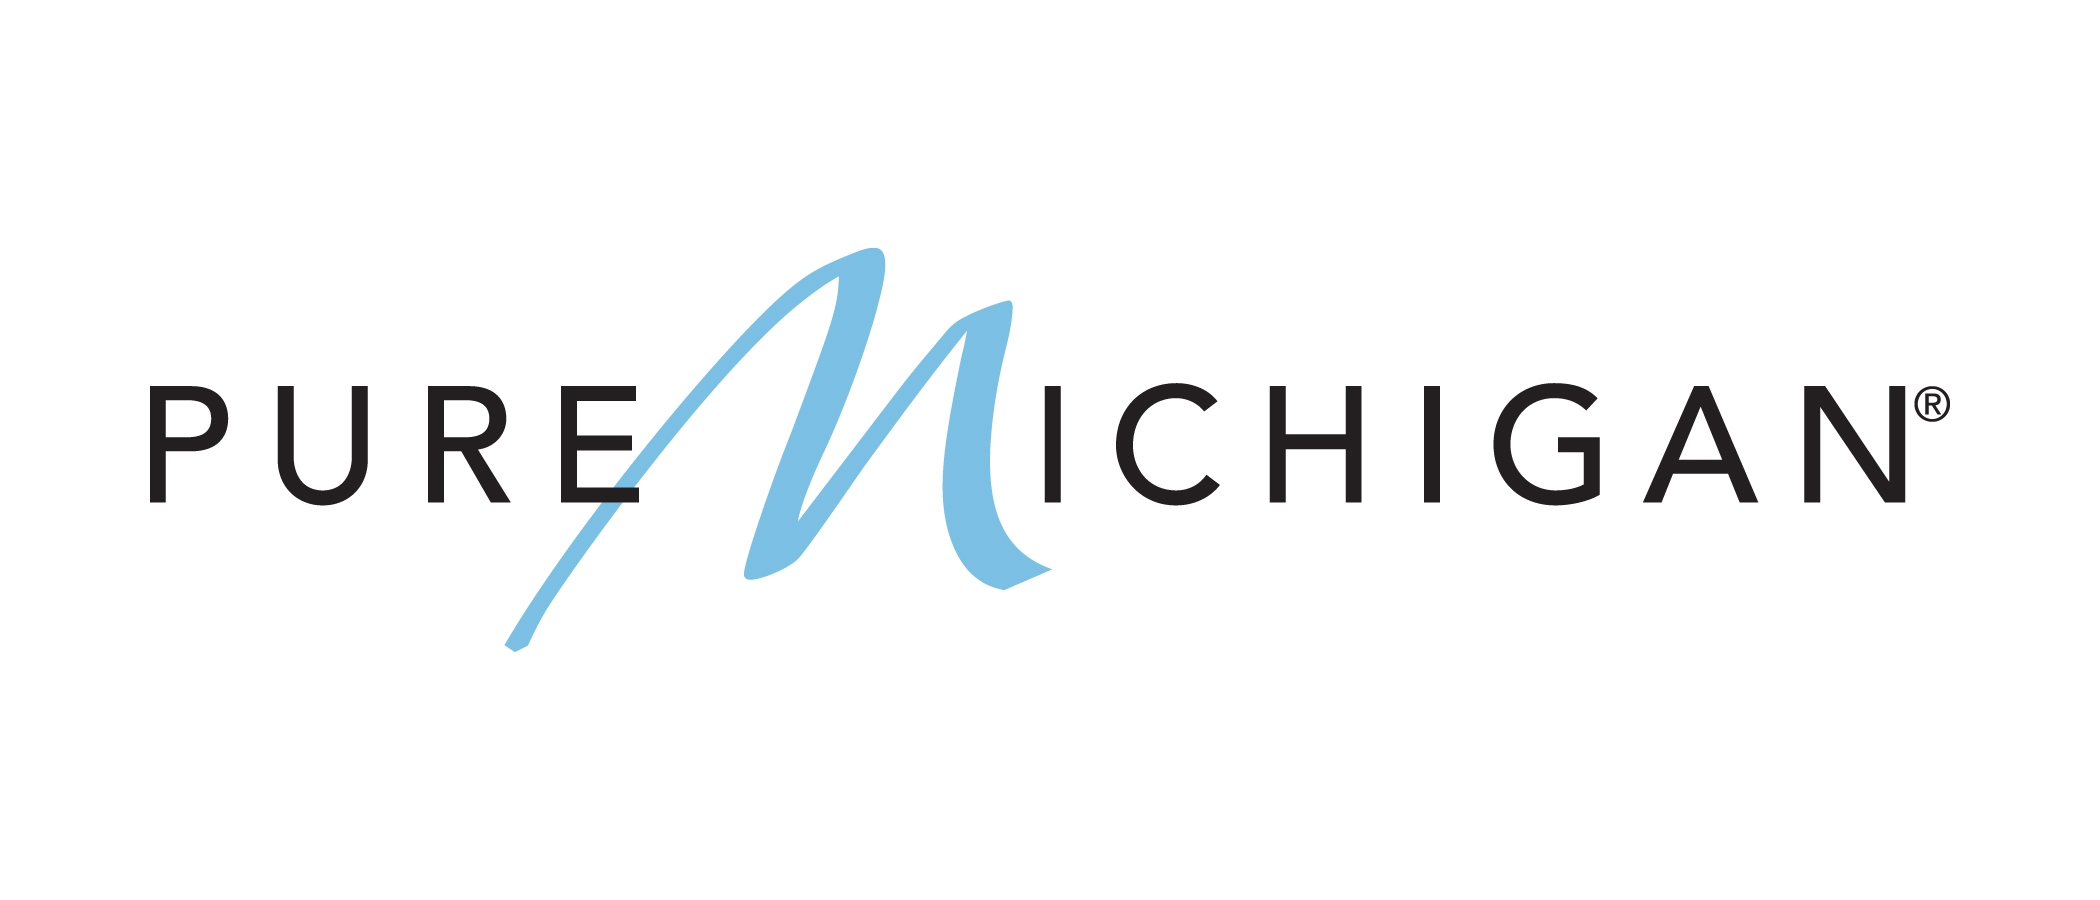 Pure Michigan Campaign Brings in $1 Billion | OutdoorHub